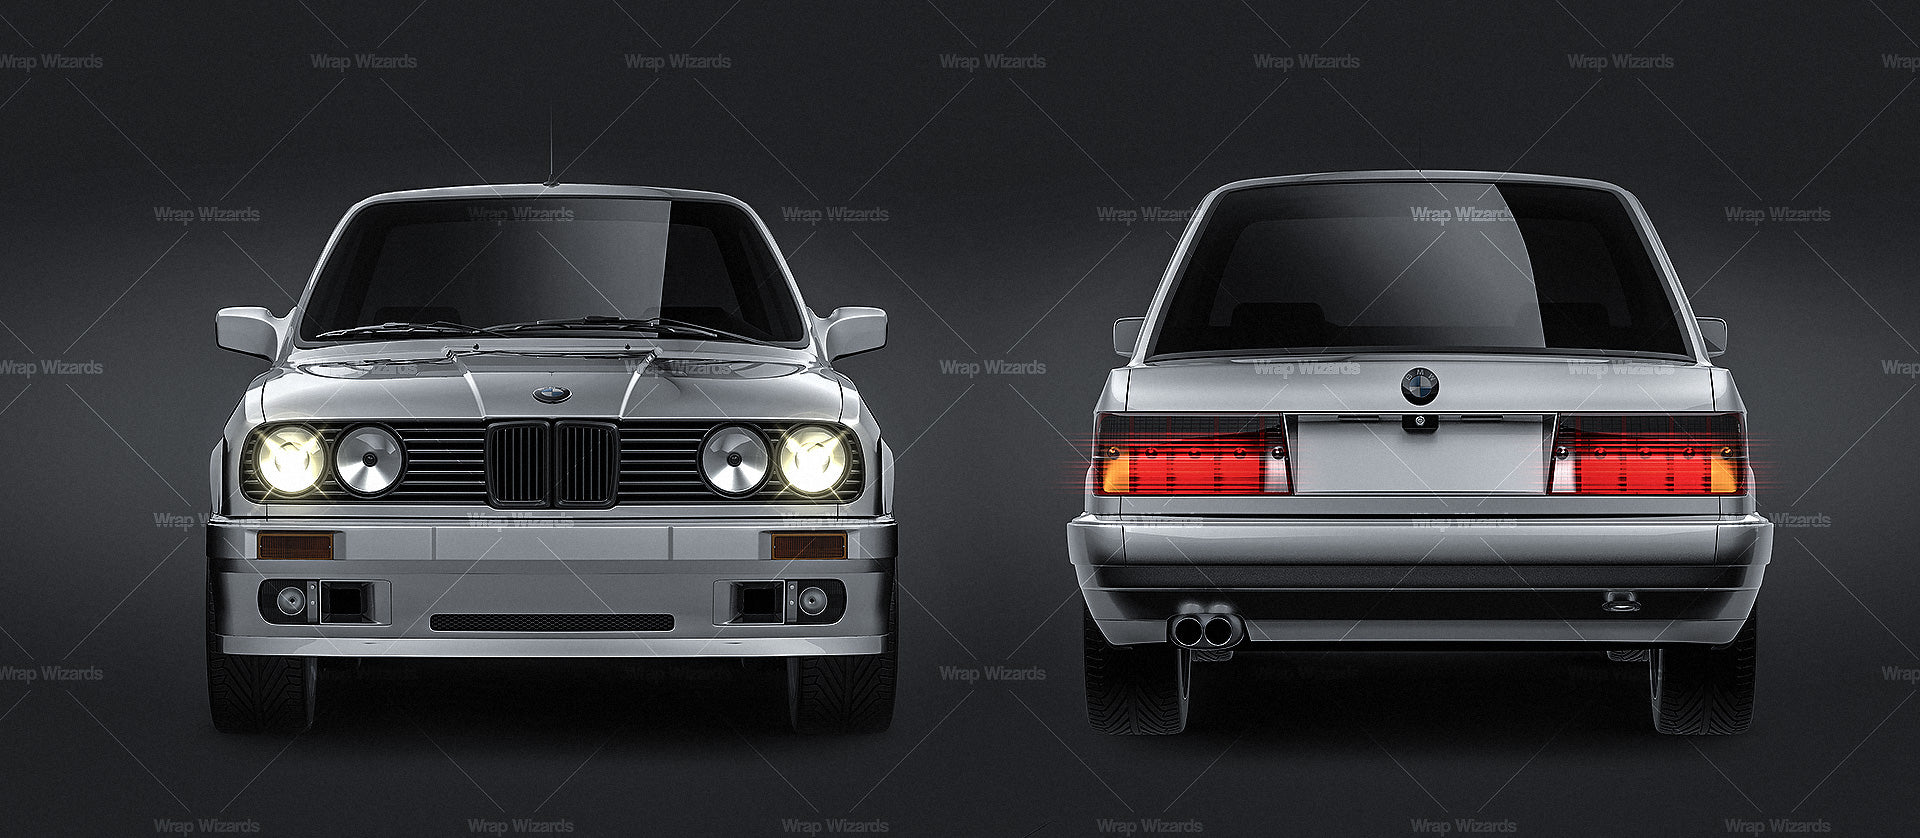 BMW 3-Series 316i E30 Coupe - Car Mockup